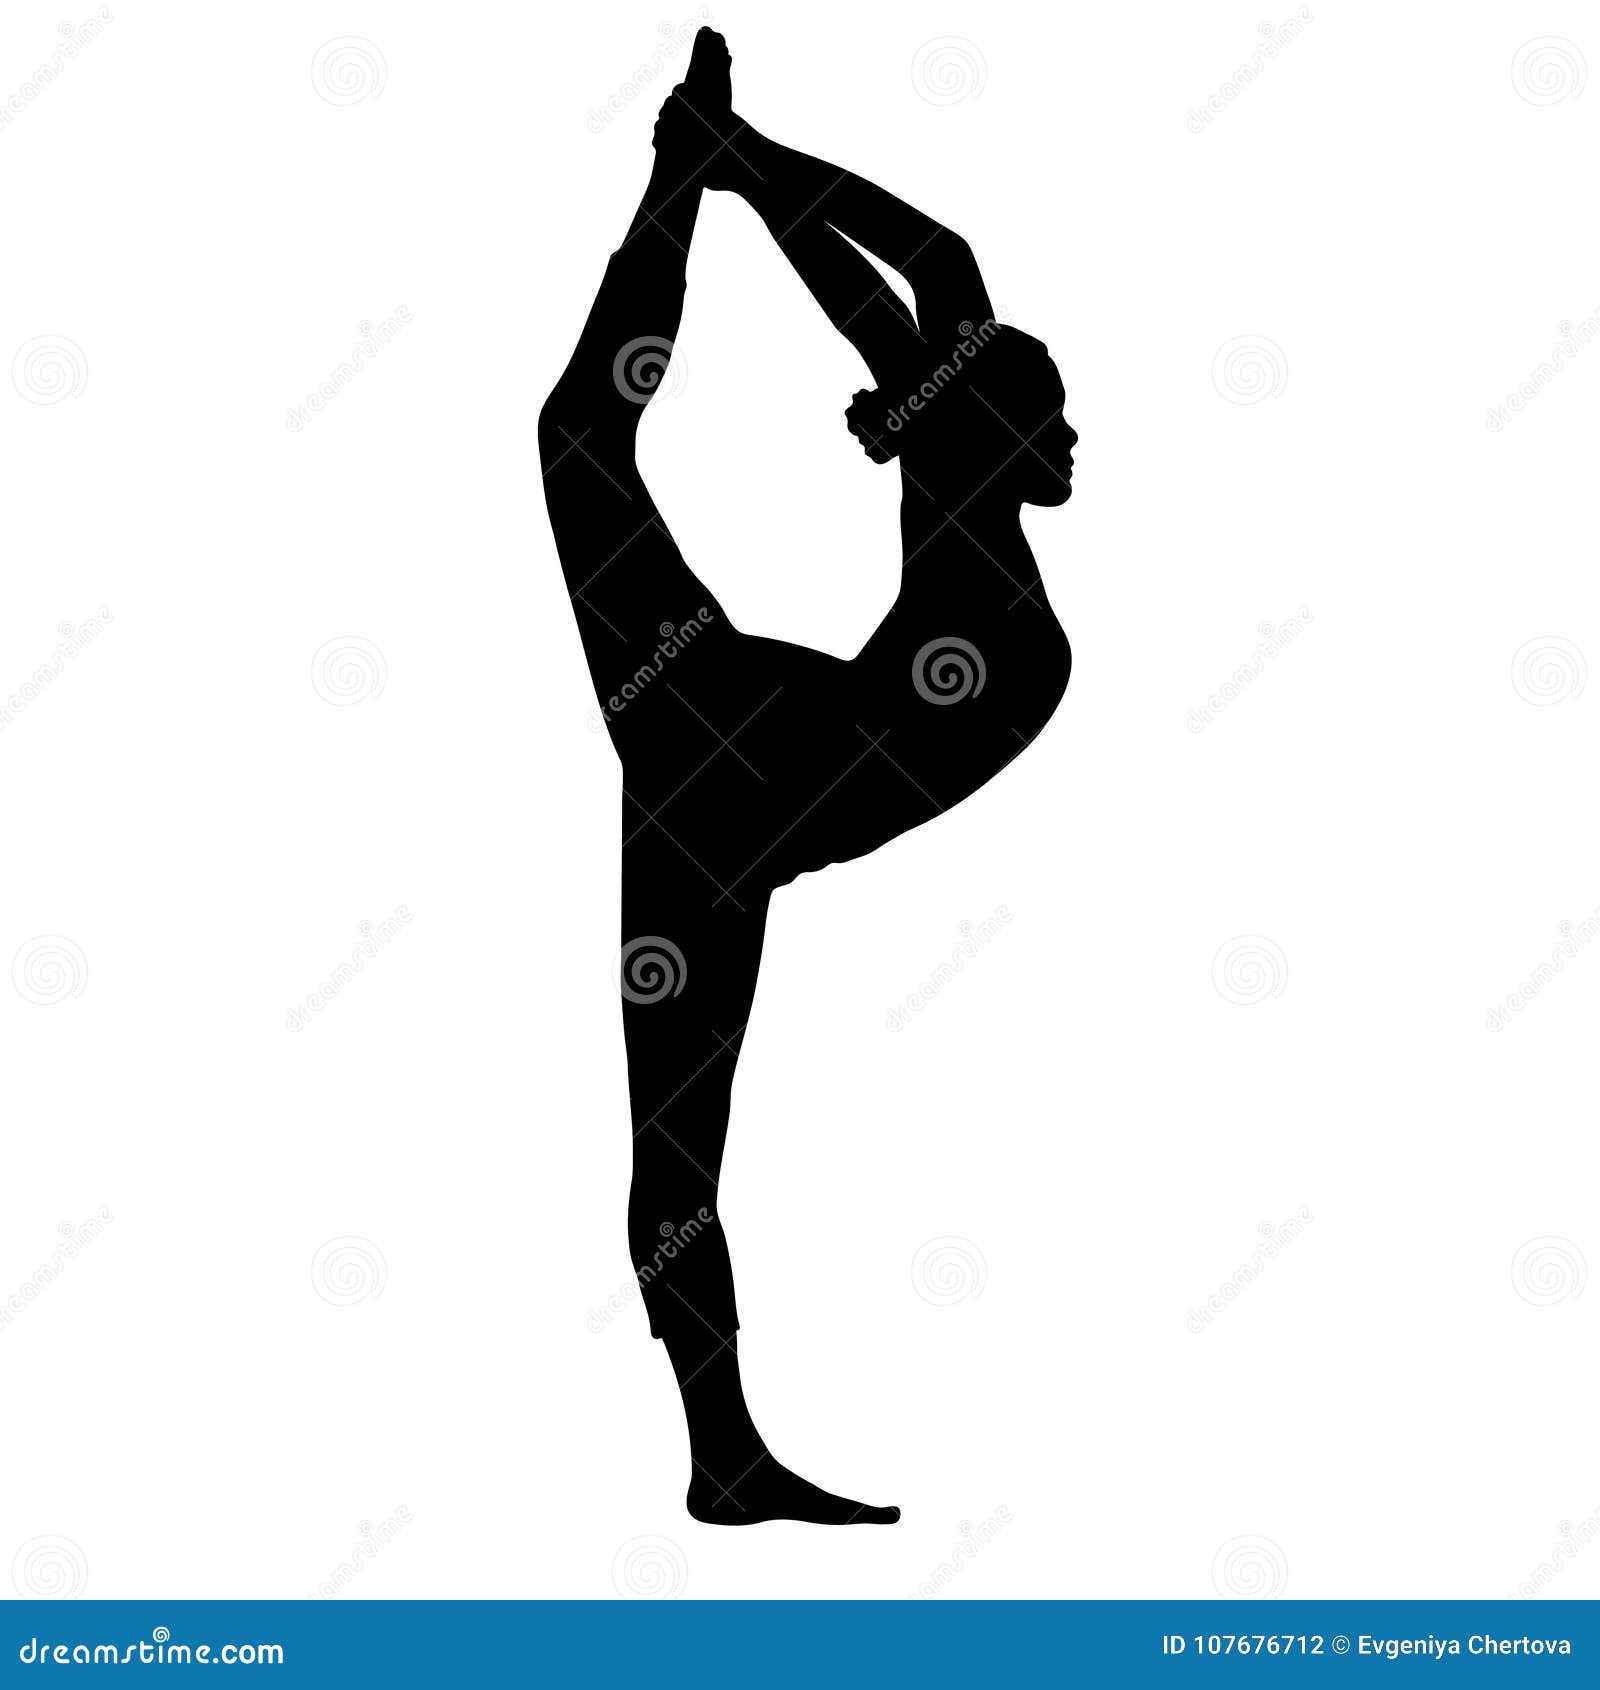 Premium Vector | Yoga pose logo on sunset outline silhouette